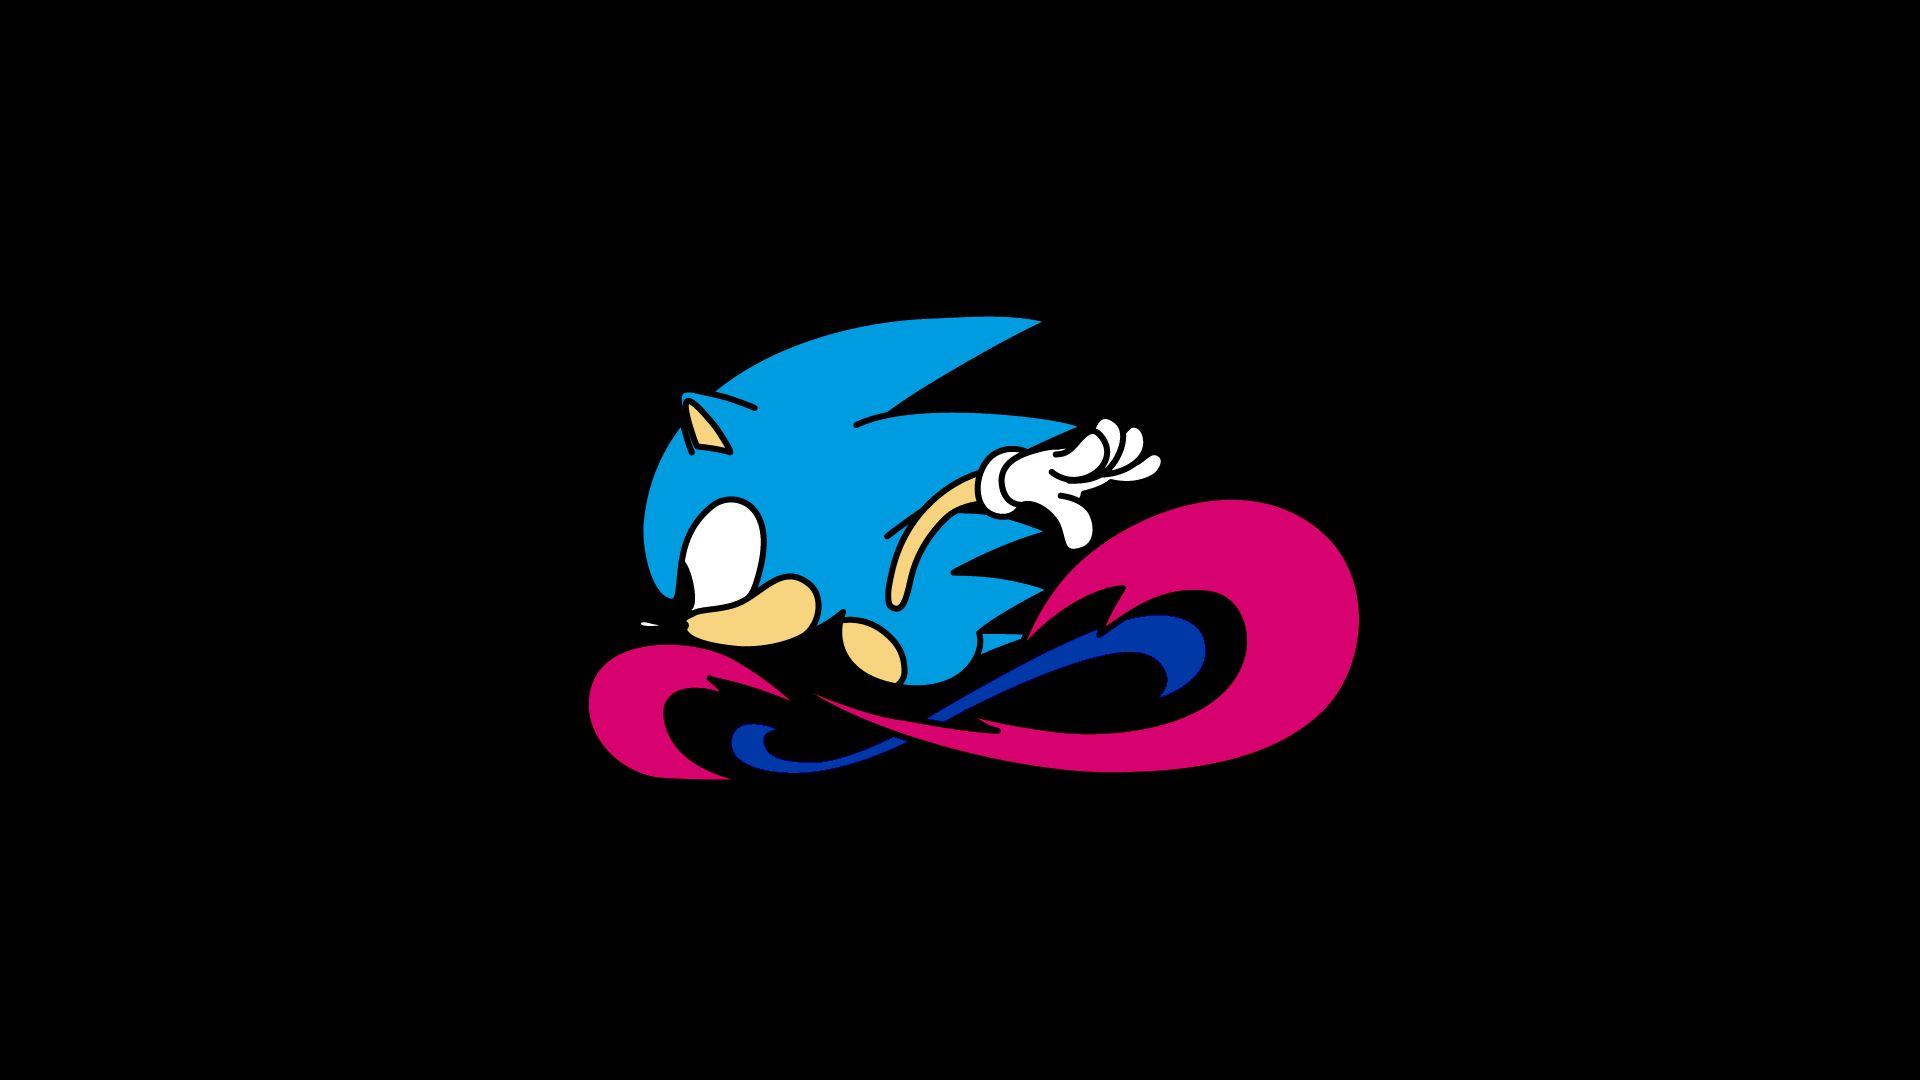 Minimalist sonic. Classic Sonic. Classic sonic, Sonic